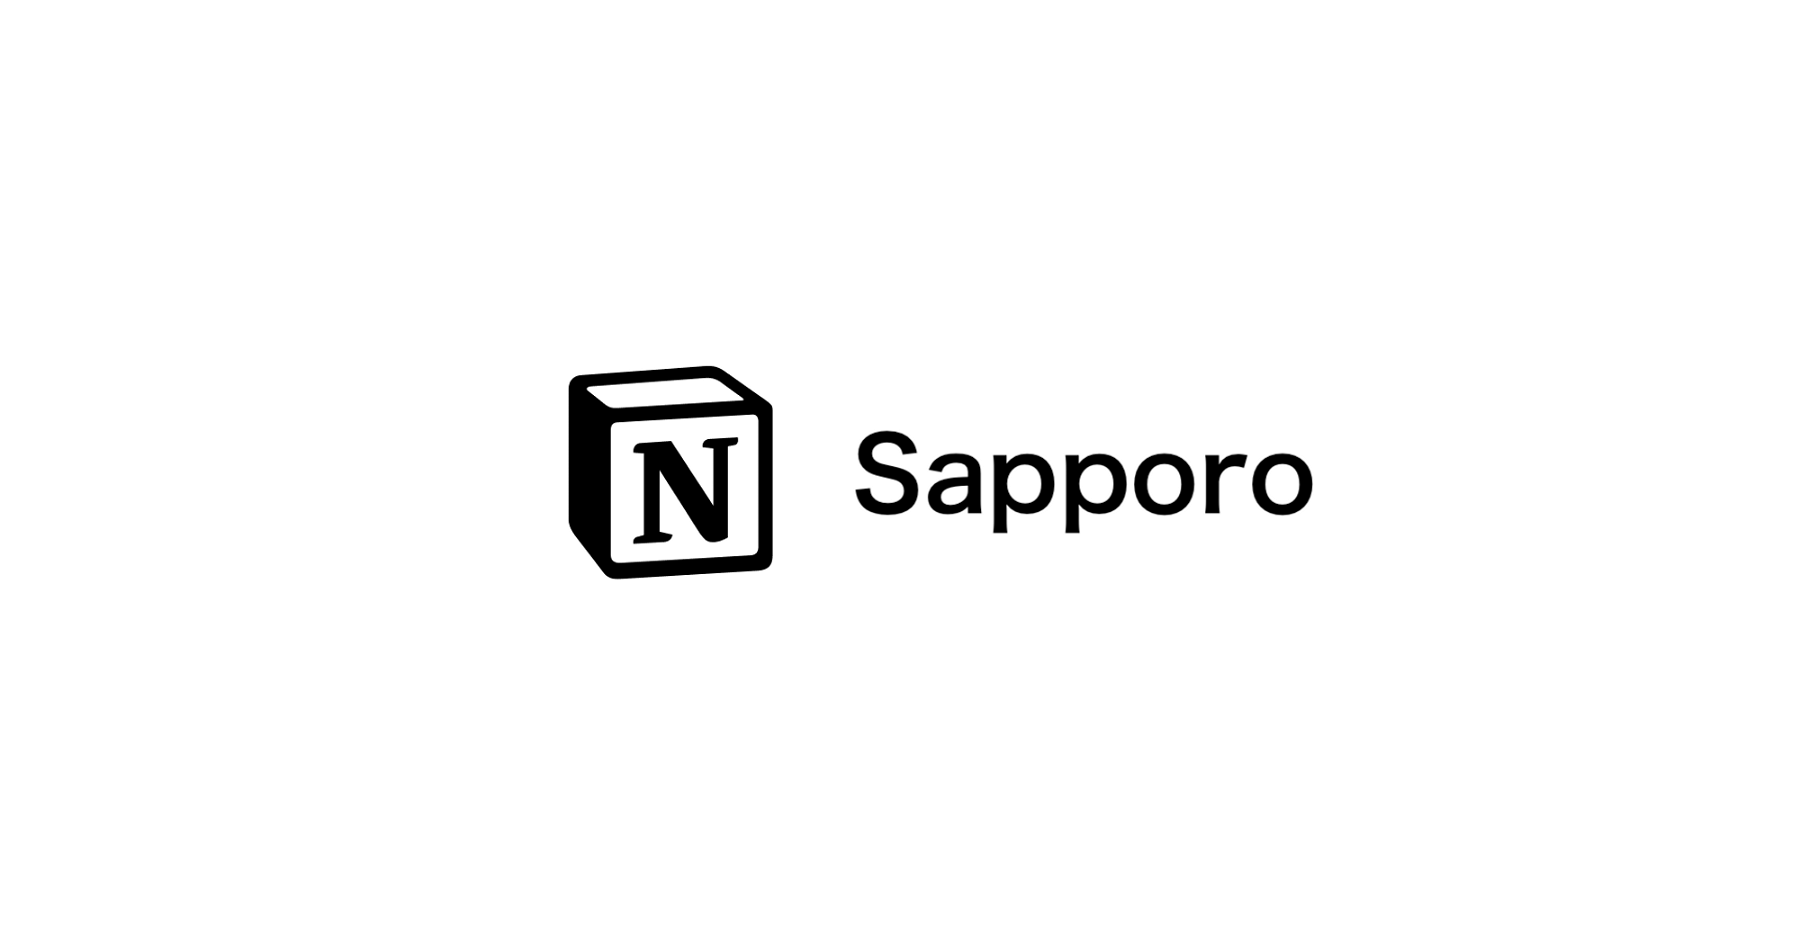 Notion Sapporo